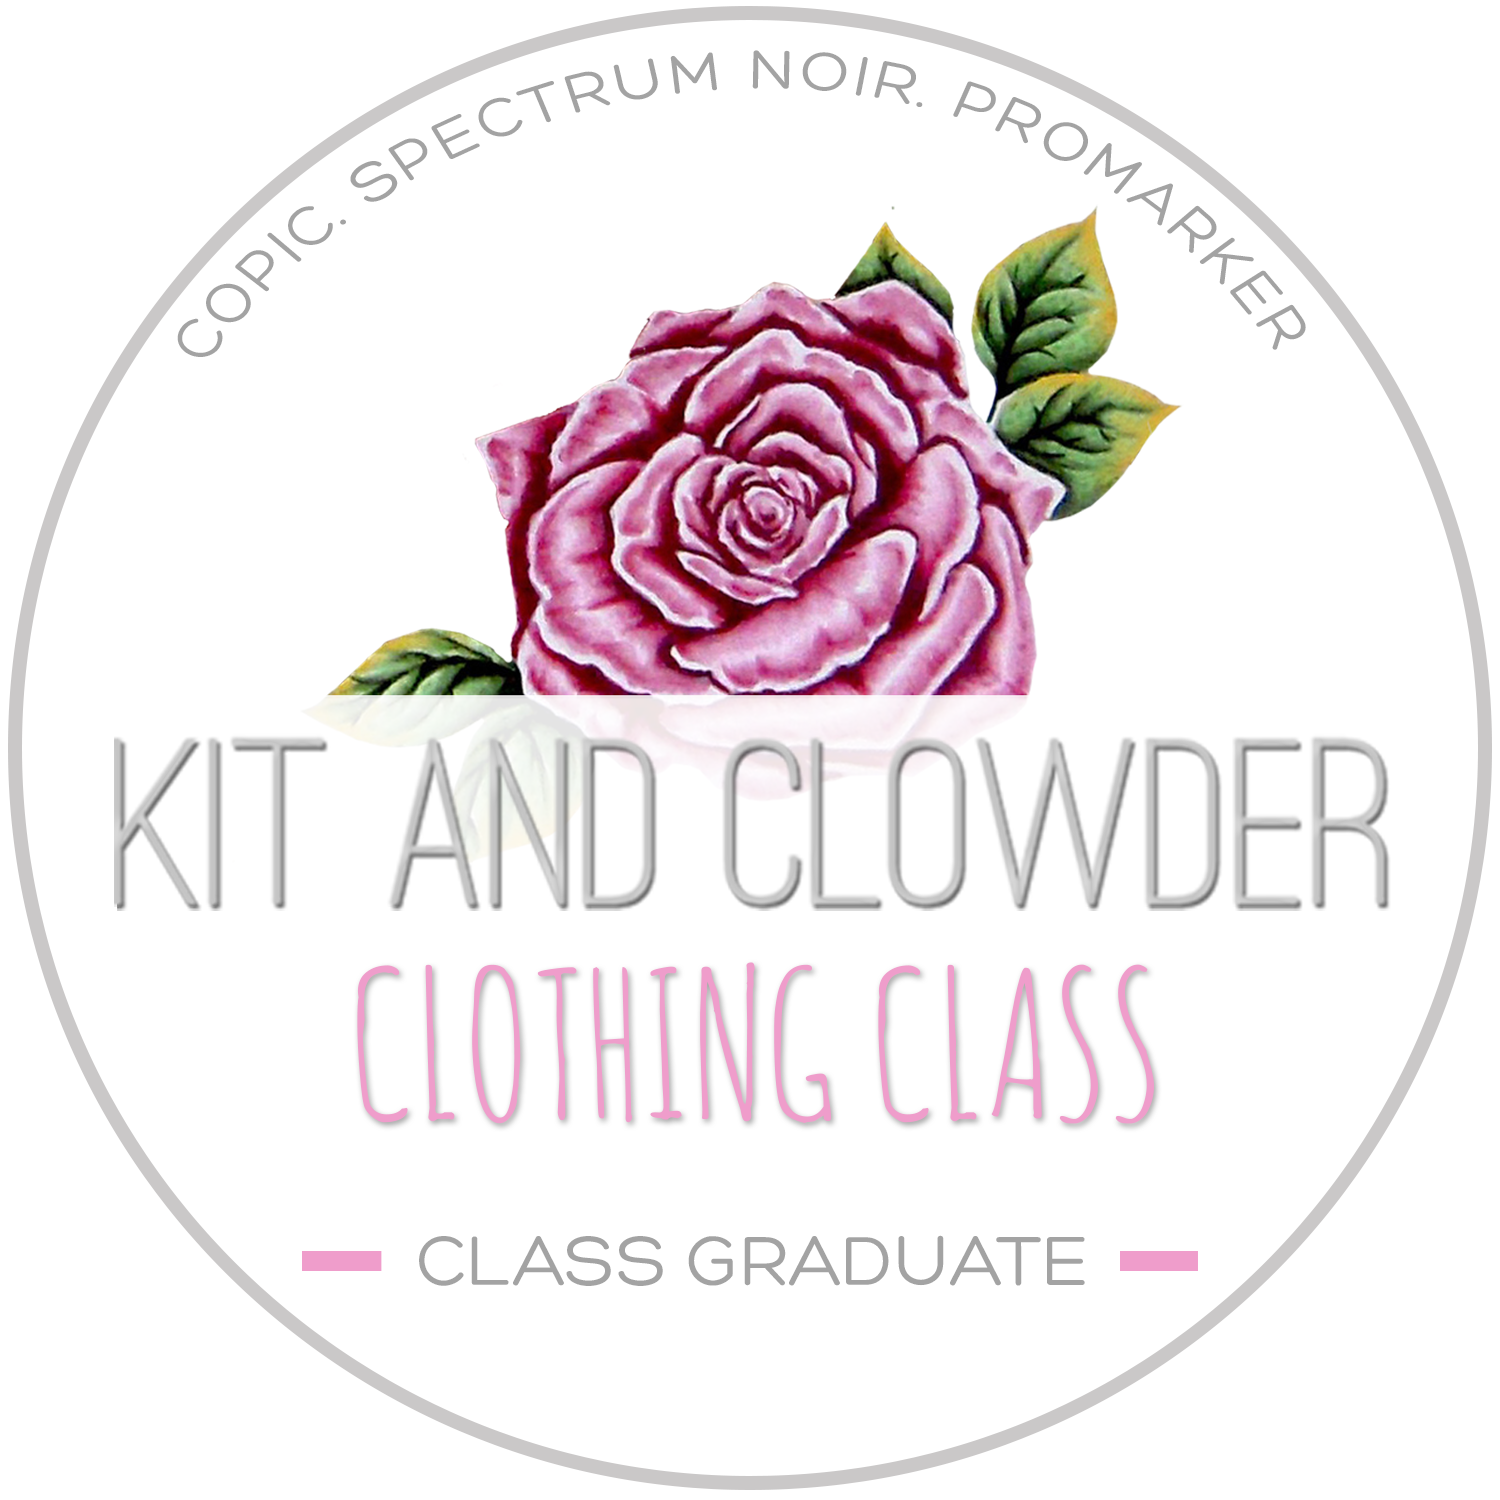 Graduate at Kit and Clowder